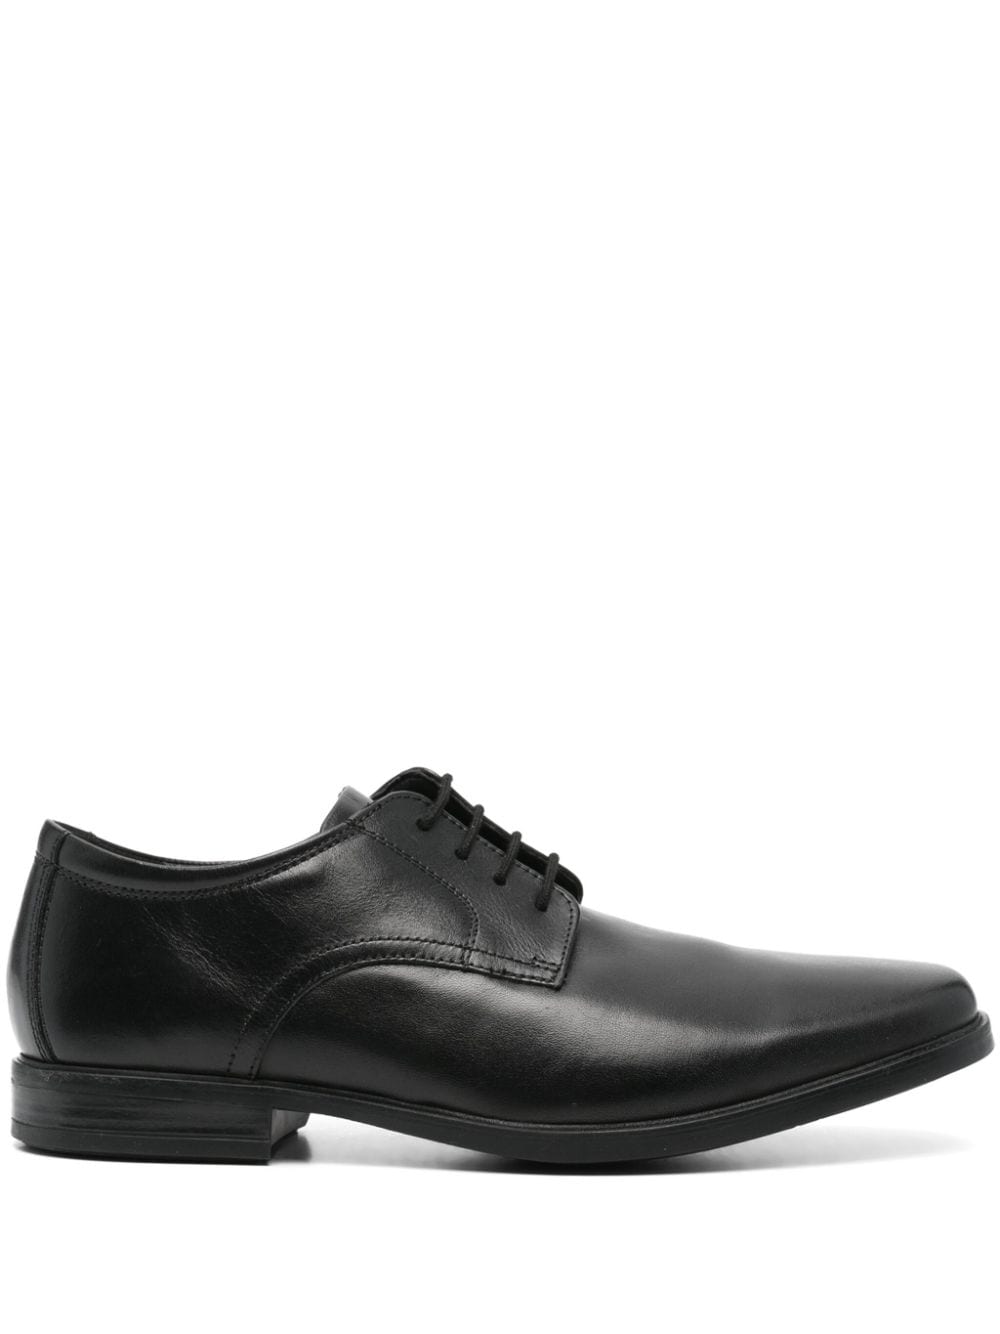 Clarks Howard Walk leather shoes Black